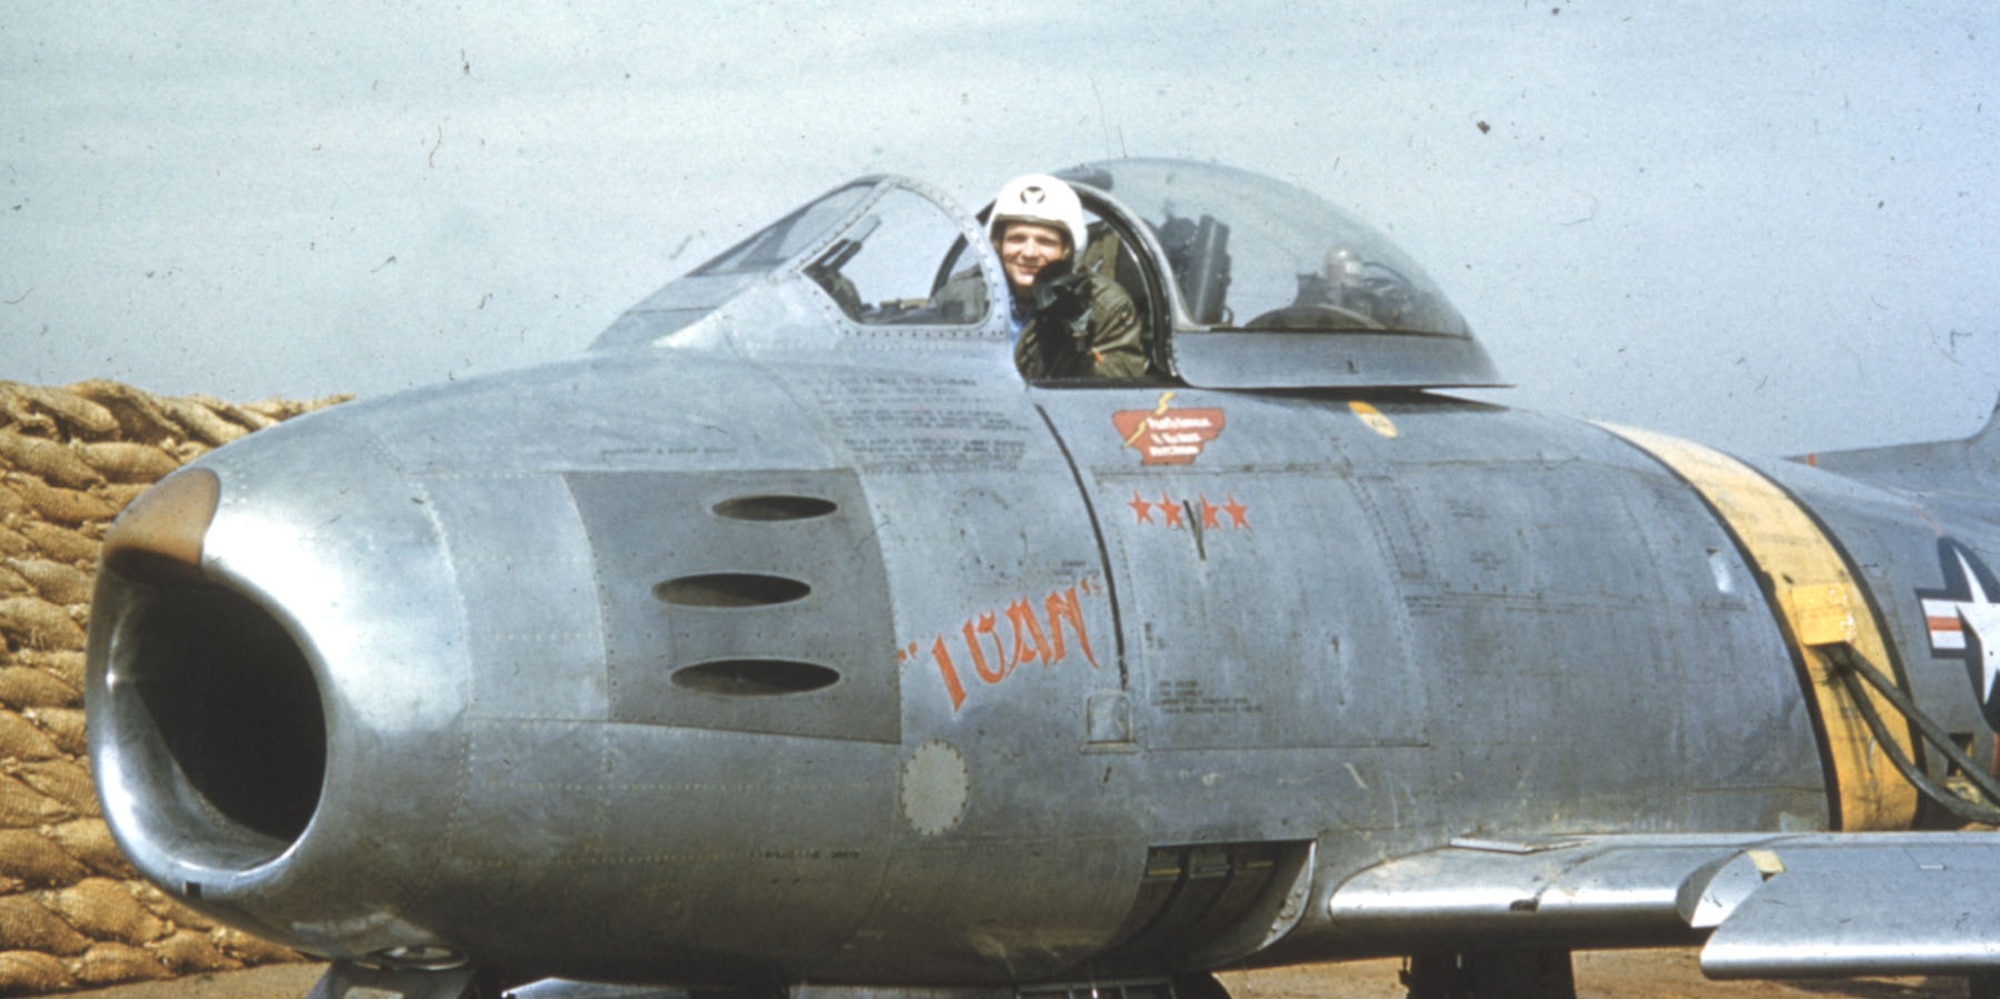 Capt. Iven C. Kincheloe Jr. in the cockpit of "Ivan," the F-86E he flew in combat in Korea. (U.S. Air Force photo)